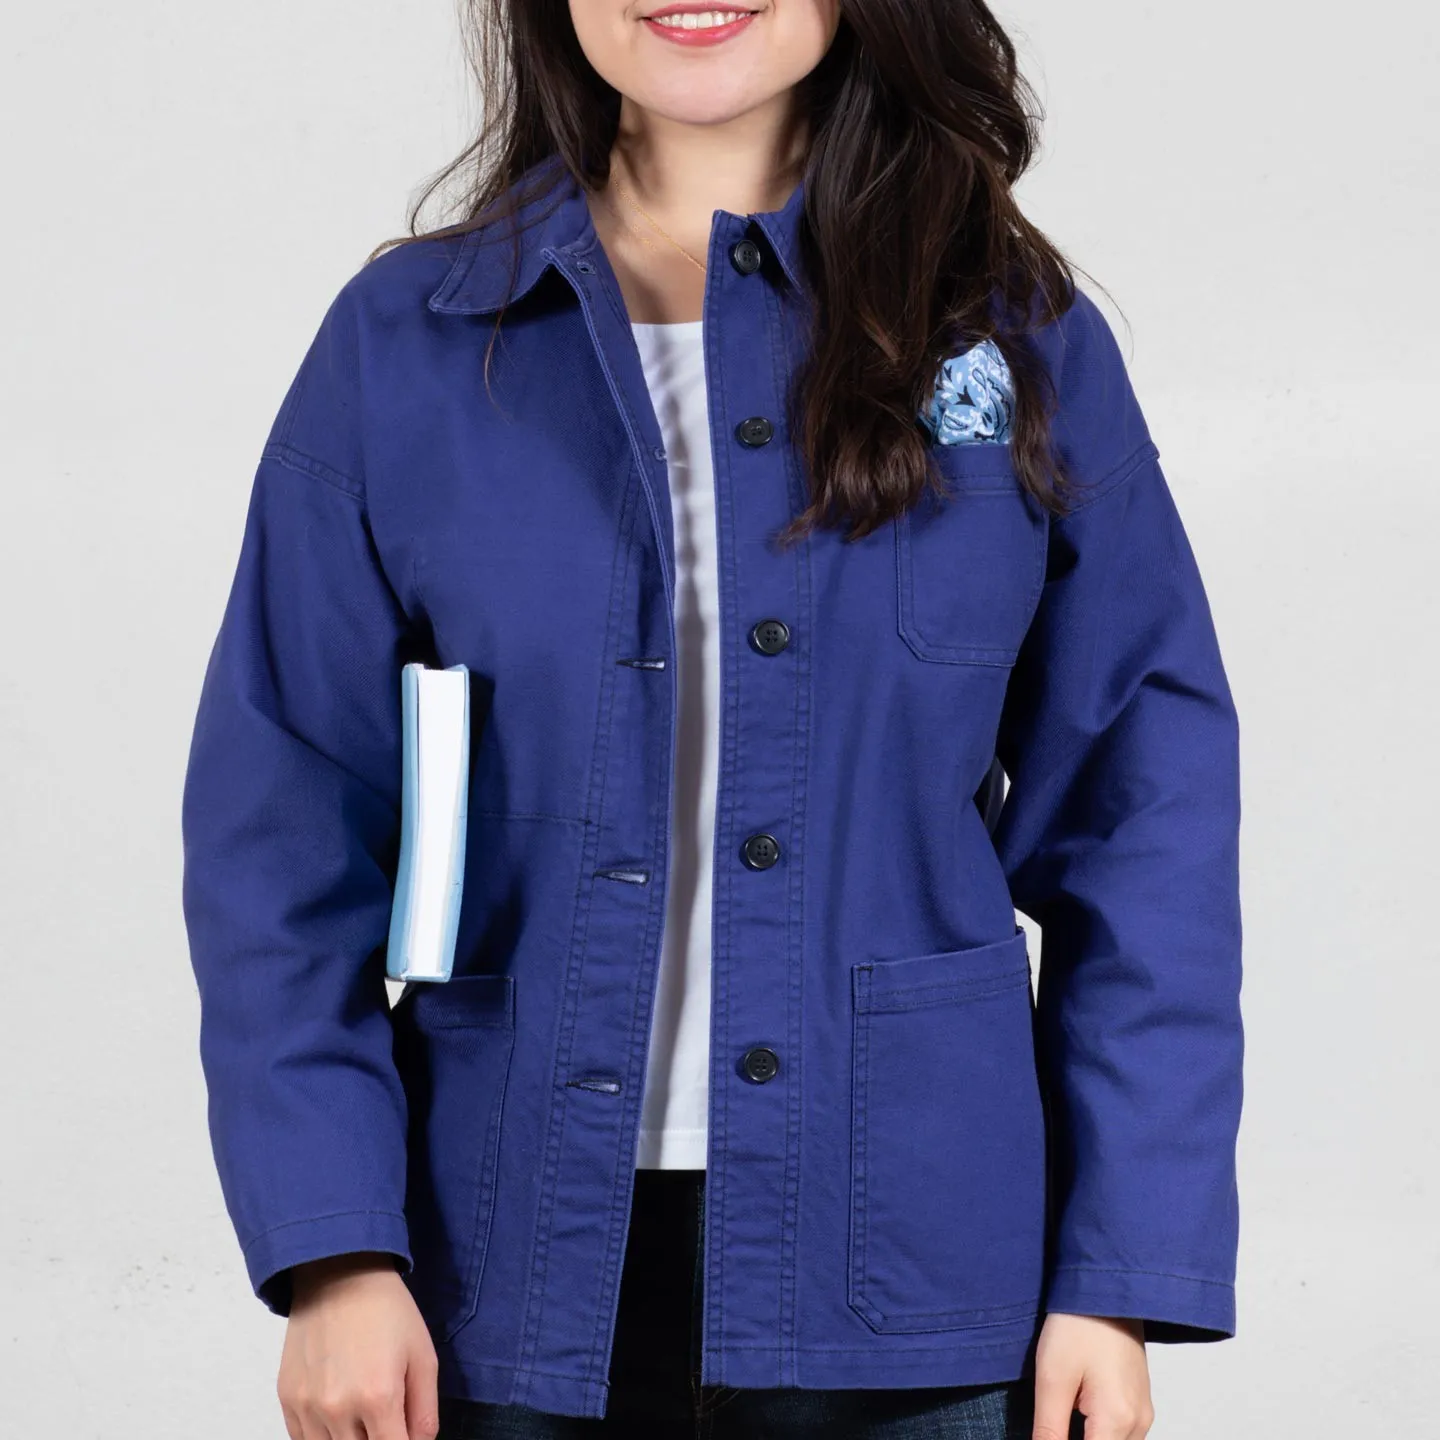 Drop-Shoulders Workwear Jacket in organic cotton 1G/6F Vétra